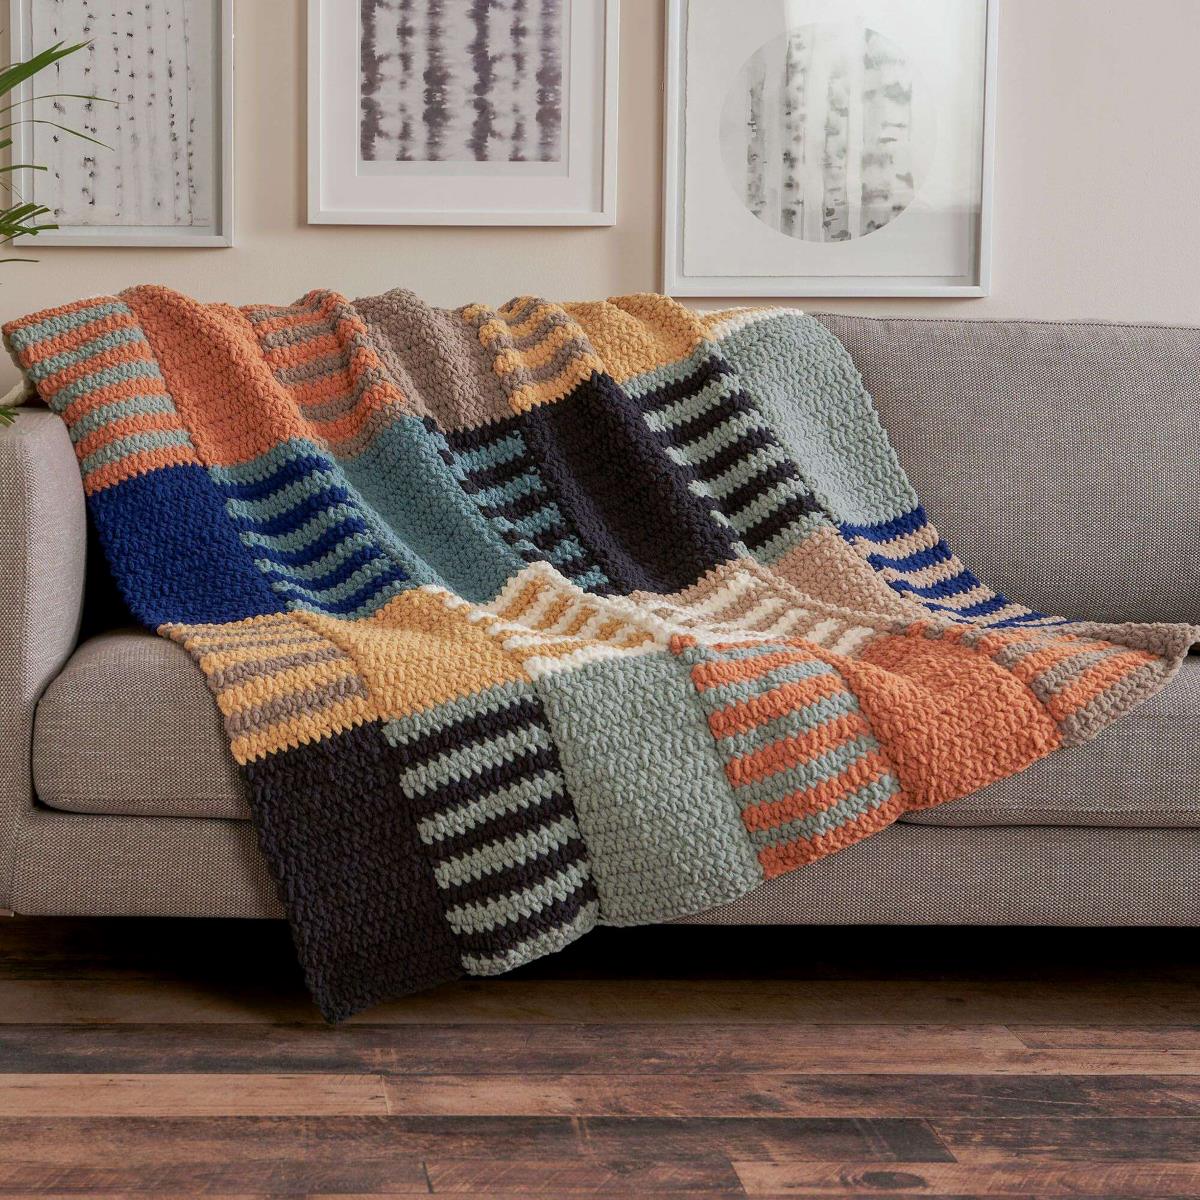 How To Block A Crochet Blanket